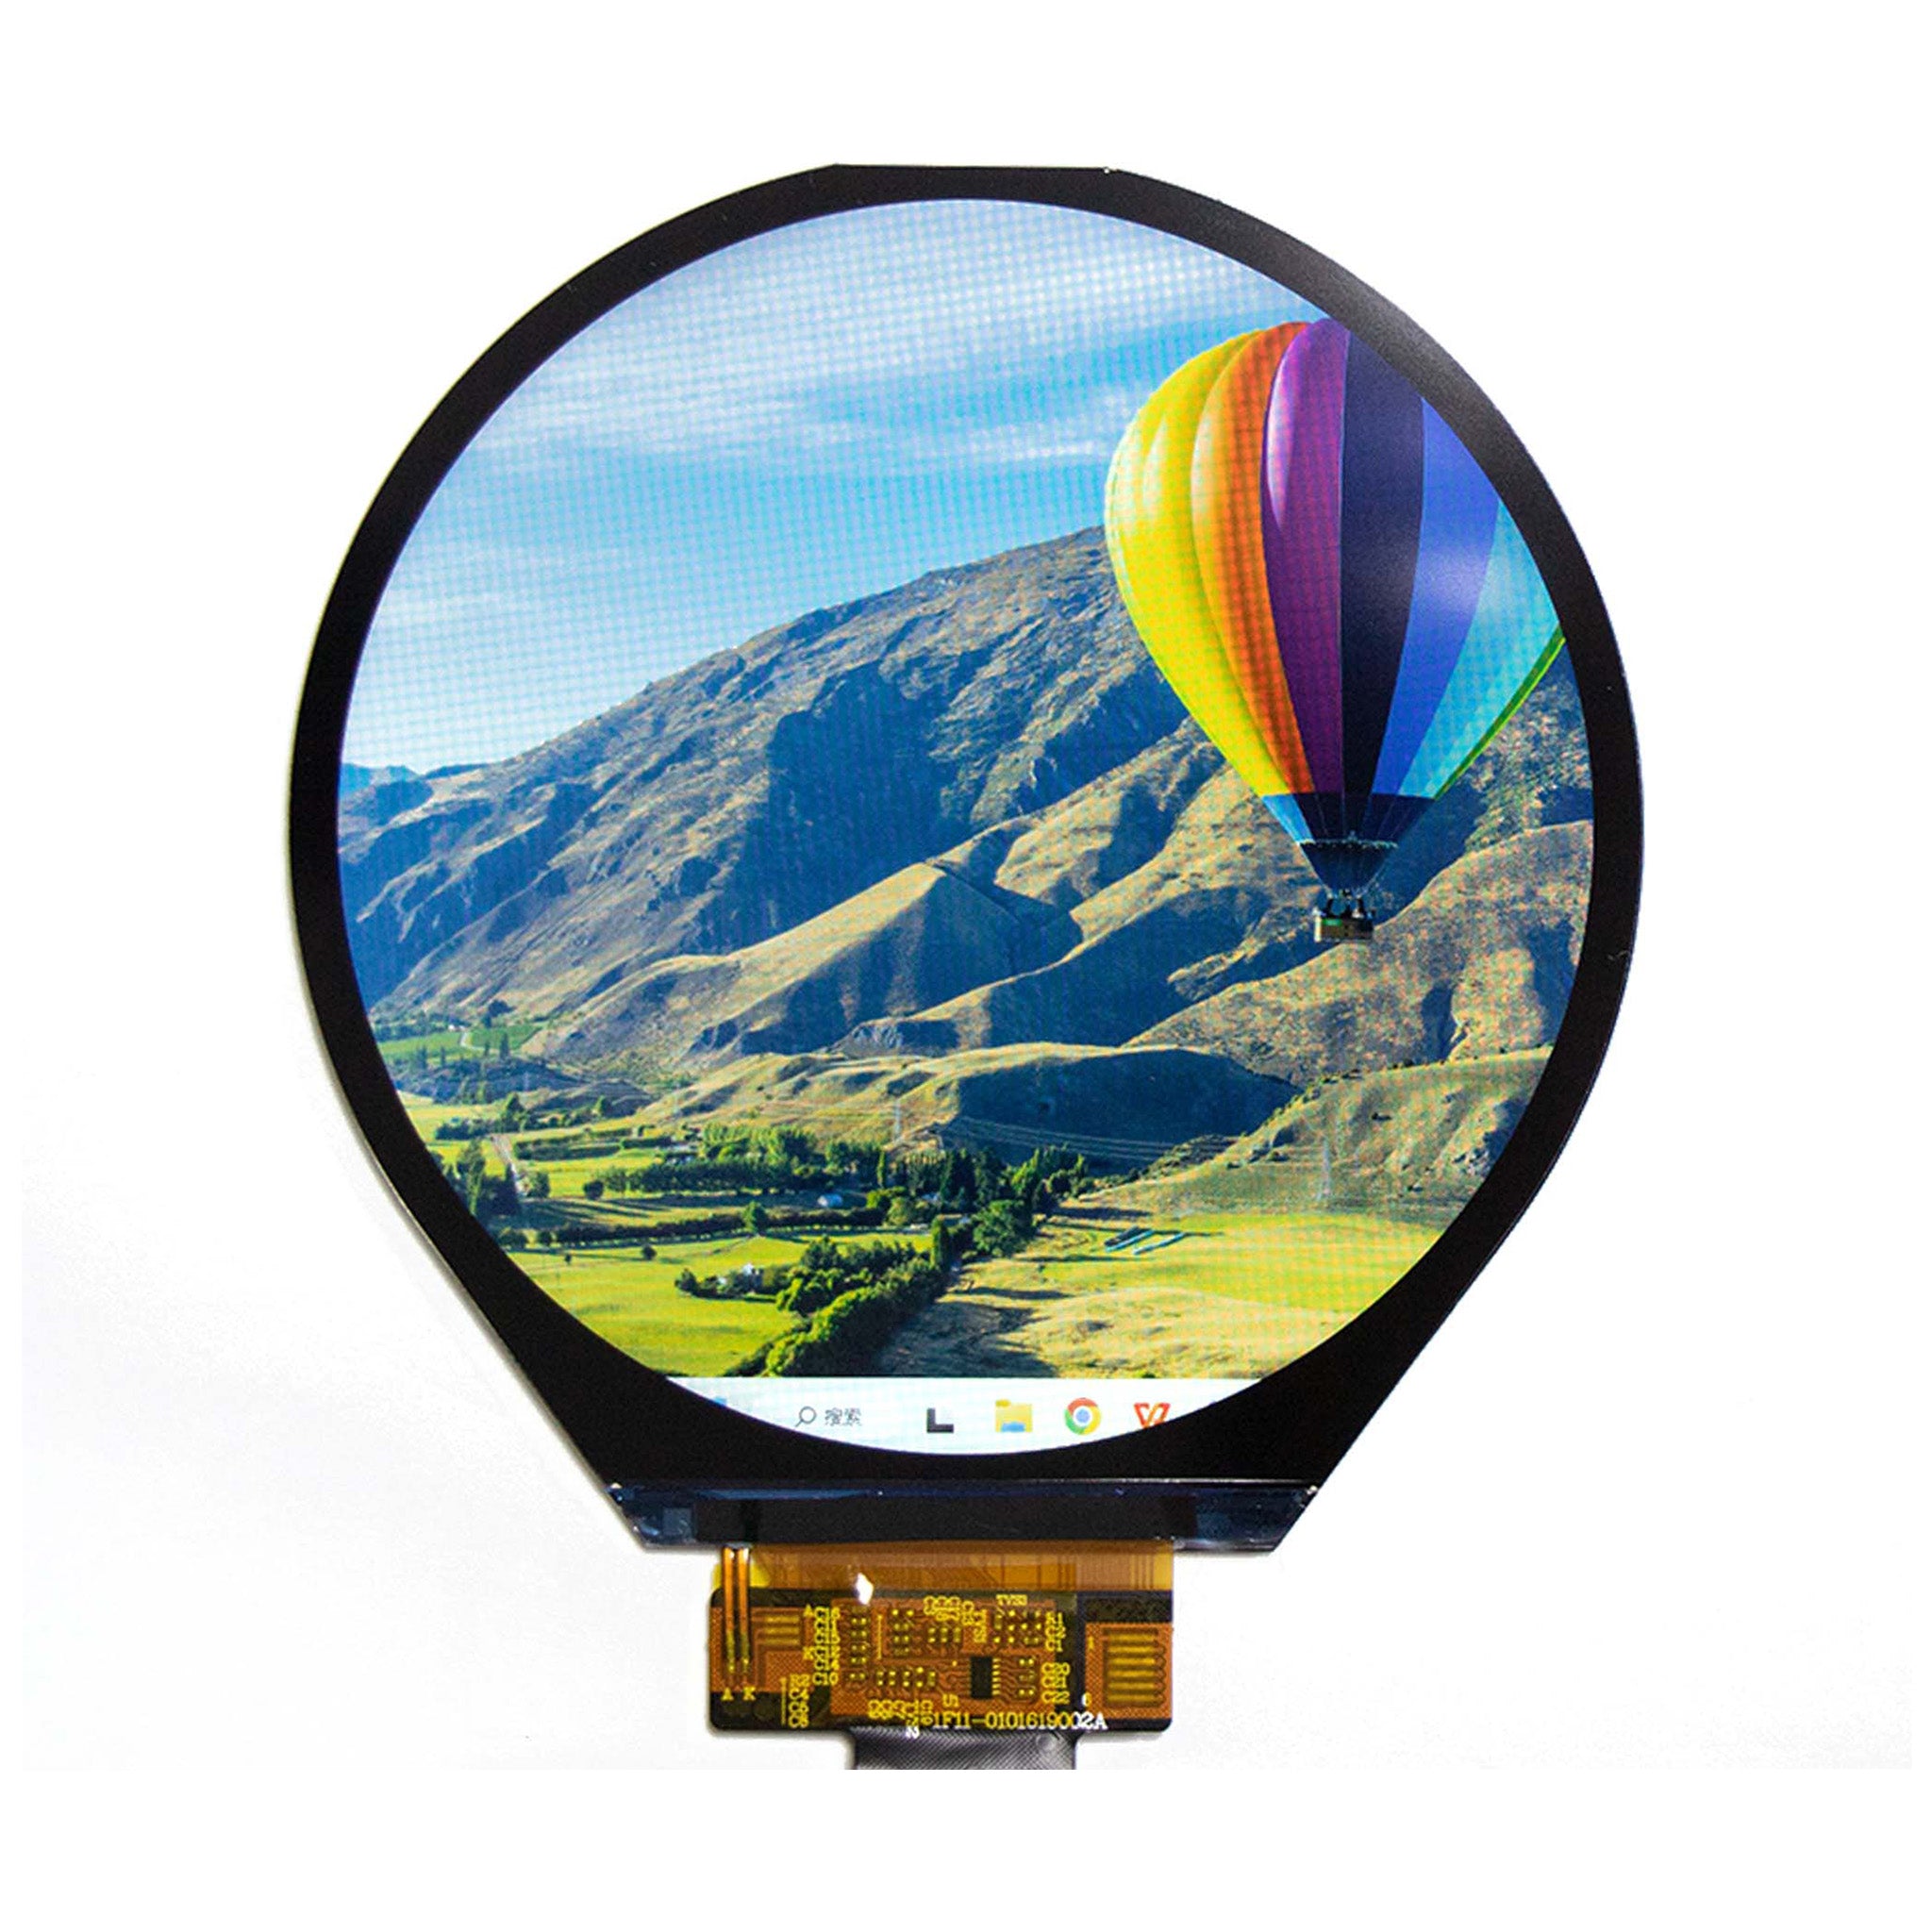 A 3.4-inch round screen showing a hot air balloon